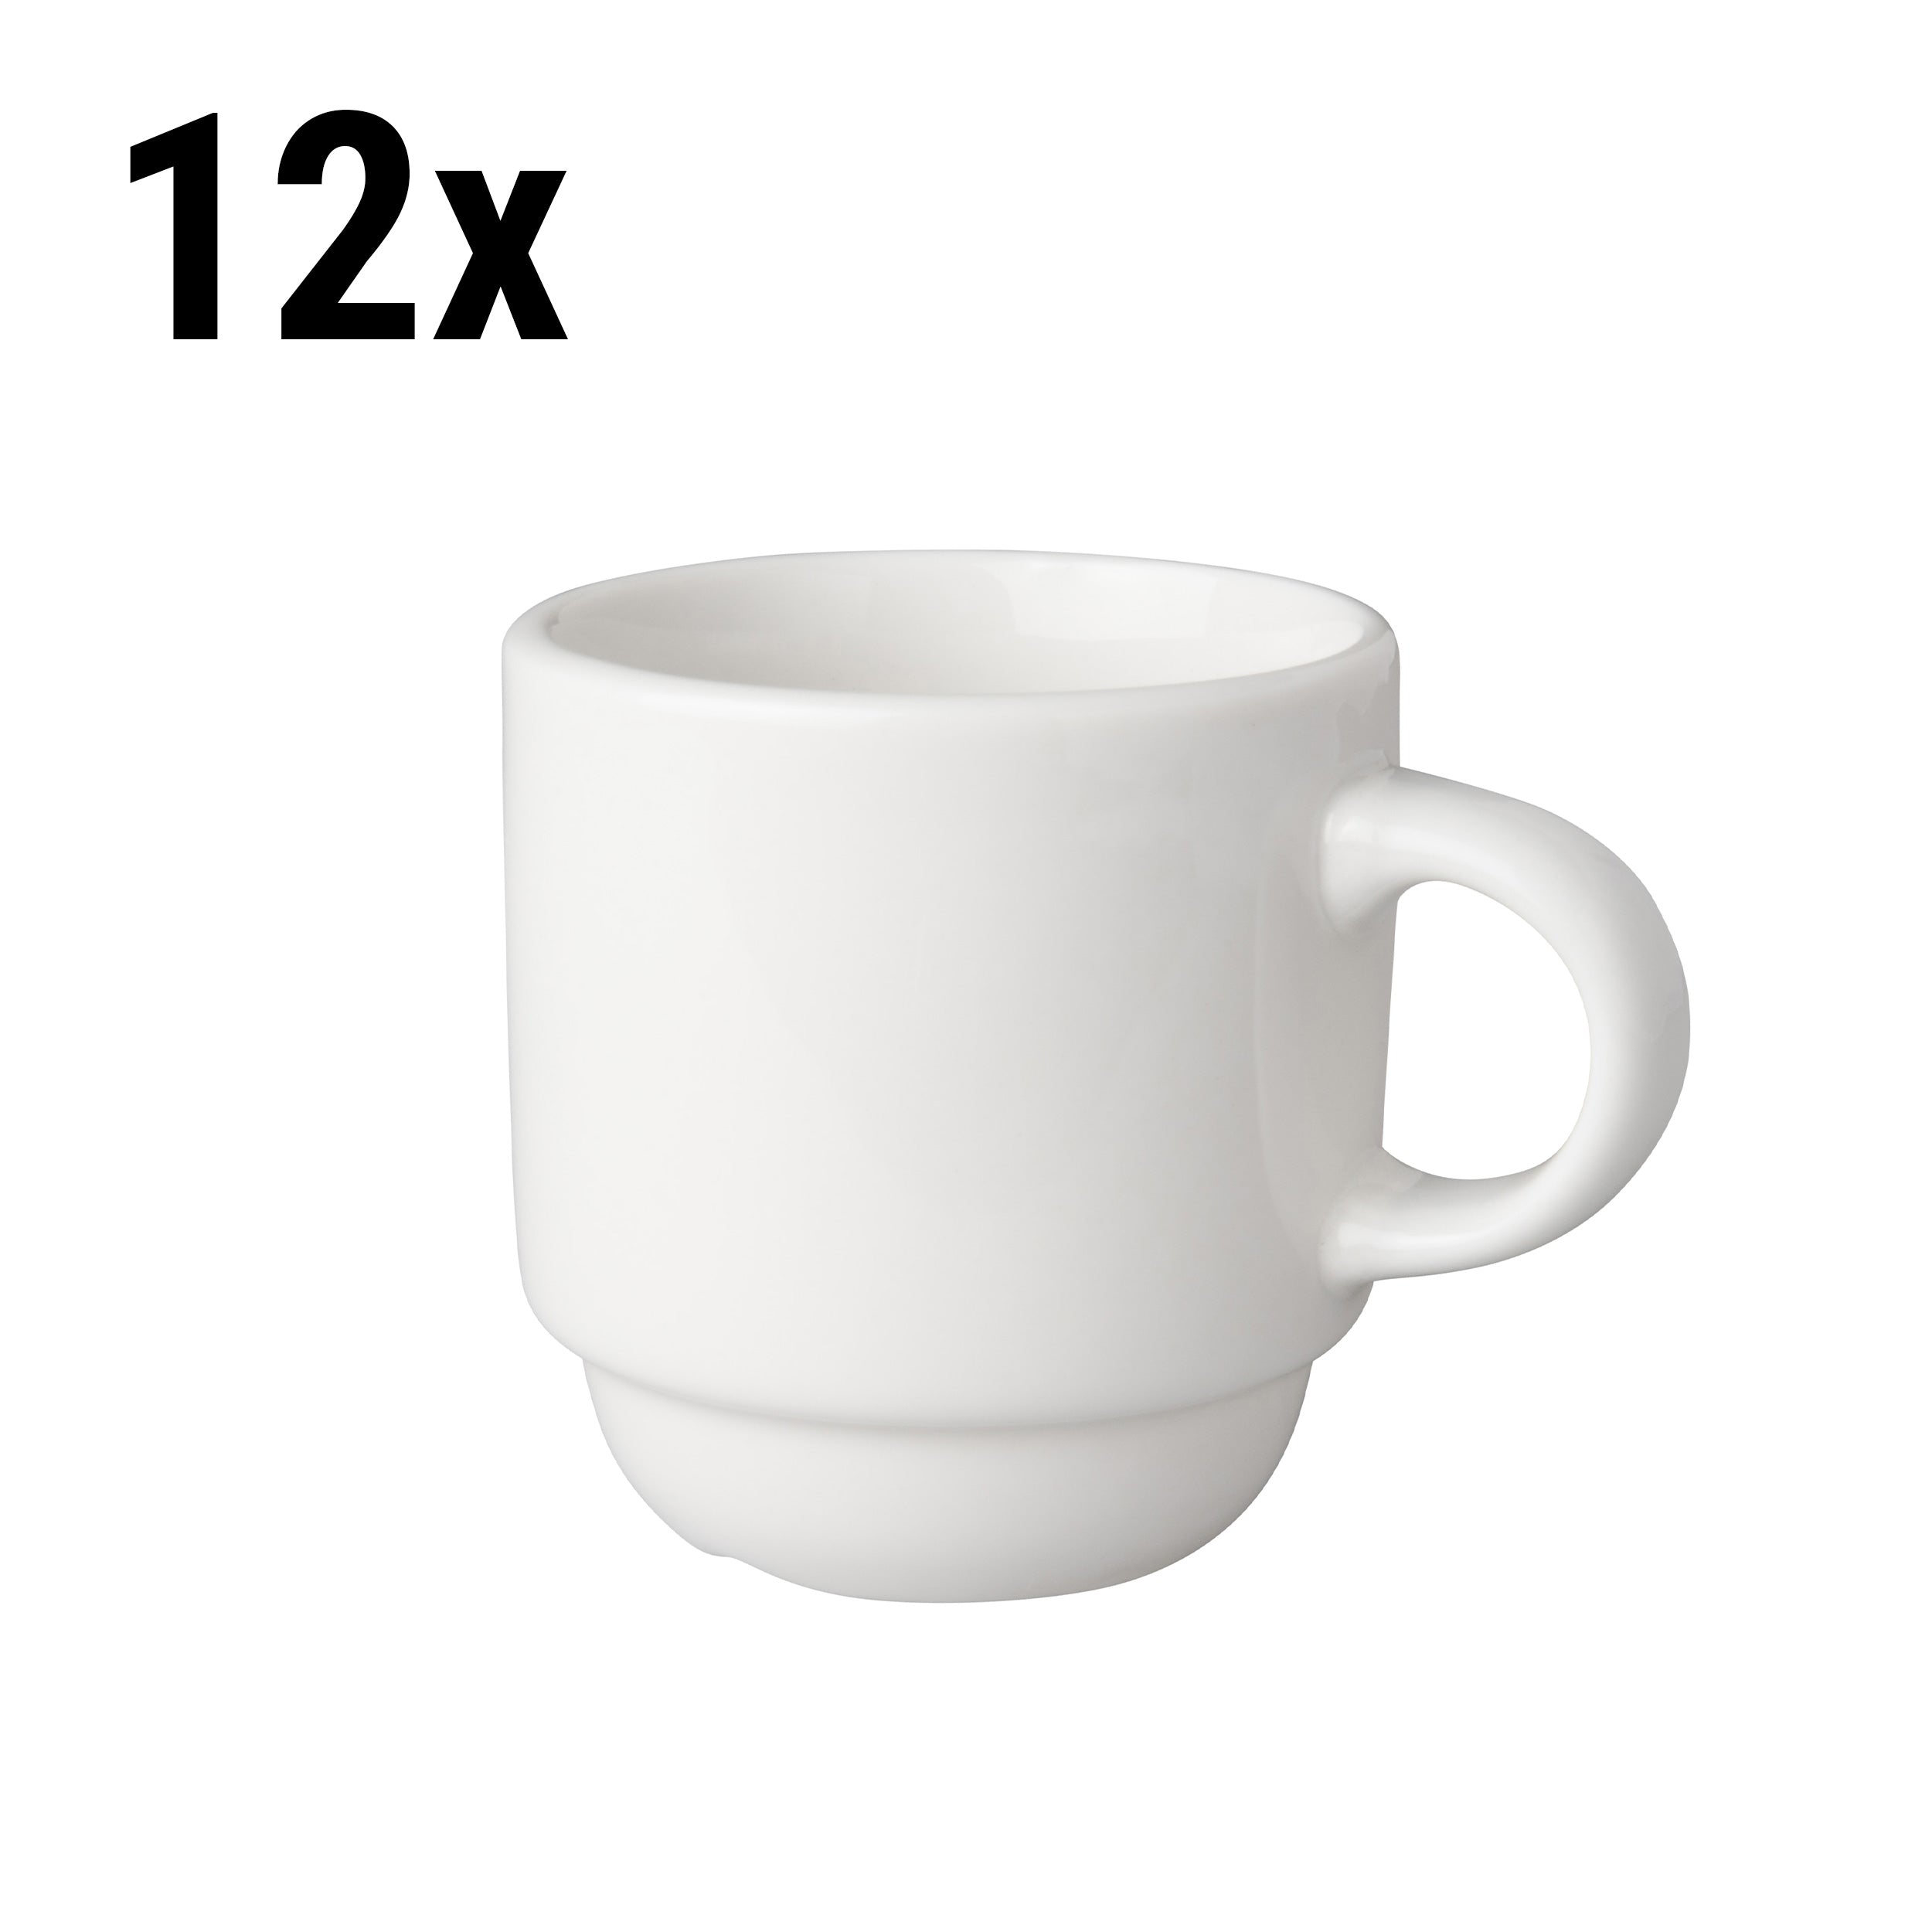 (12 stk.) Mammoet kaffekopp - 14 cl - Hvit